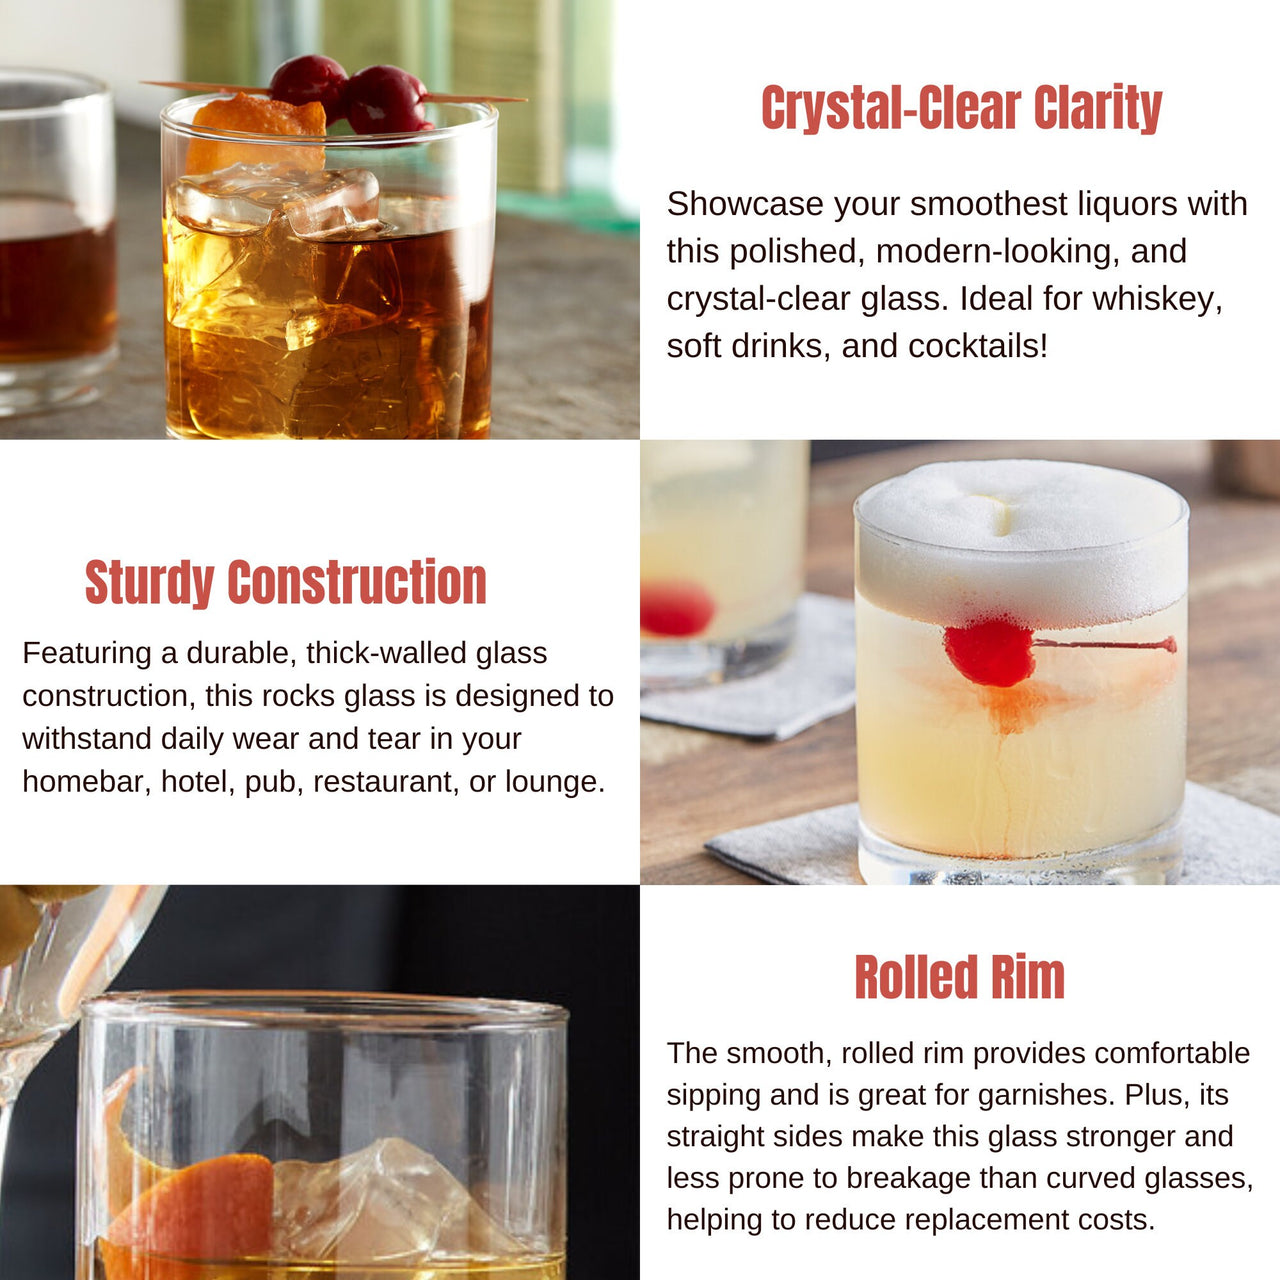 Set of 8 Monogram W Drinking Glasses, Juice, Shot, Whiskey